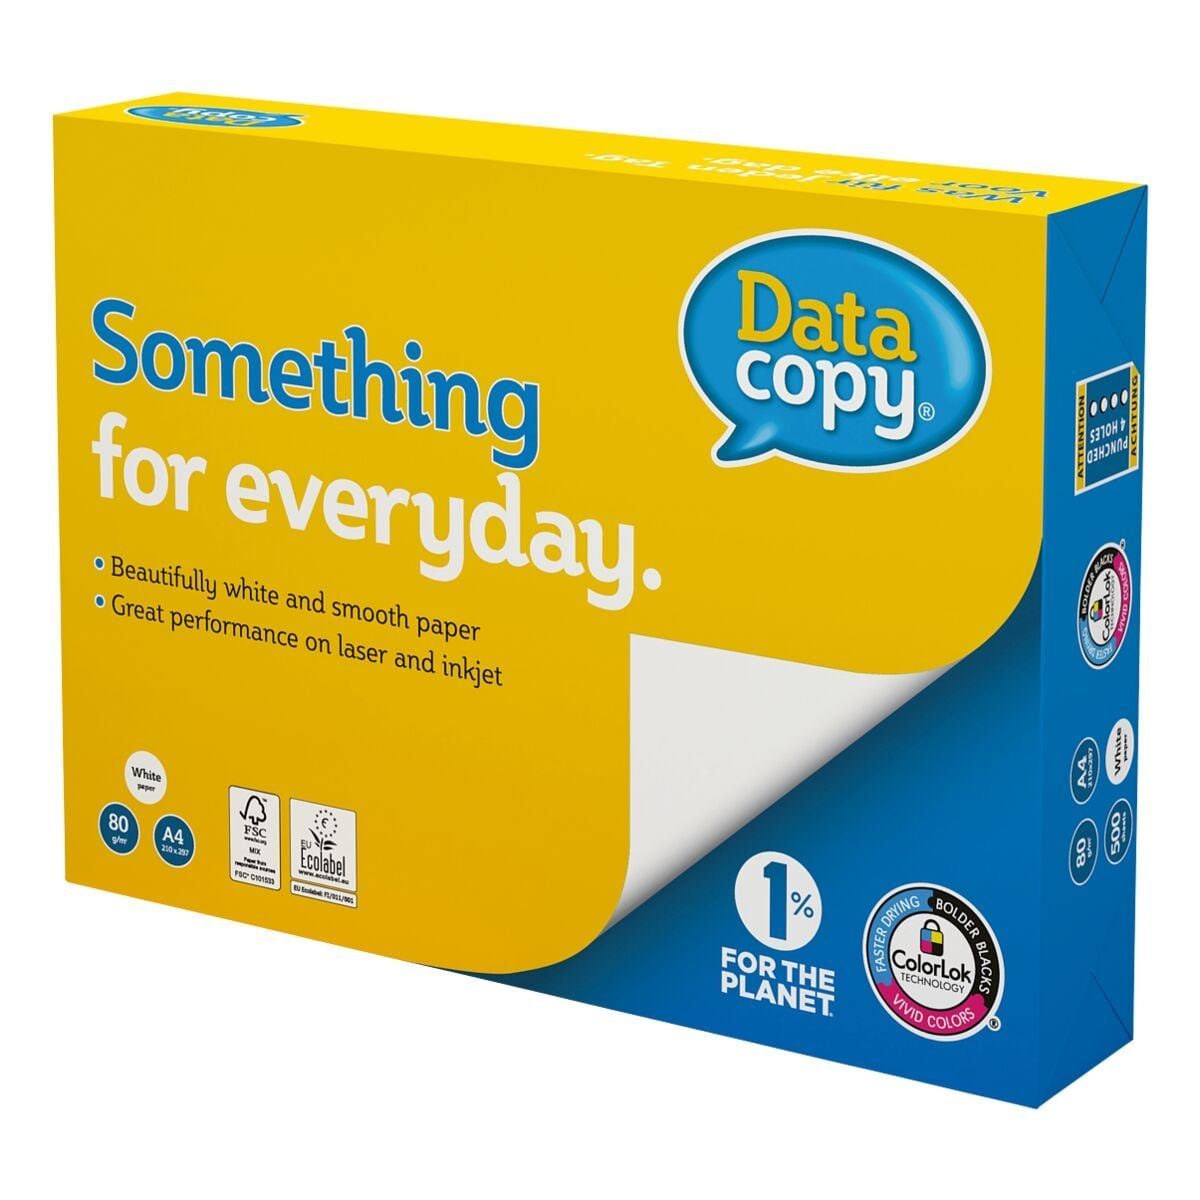 Data-Copy Druckerpapier Everyday 500 Format A4, Printing, 170 g/m², CIE, Blatt DIN 80